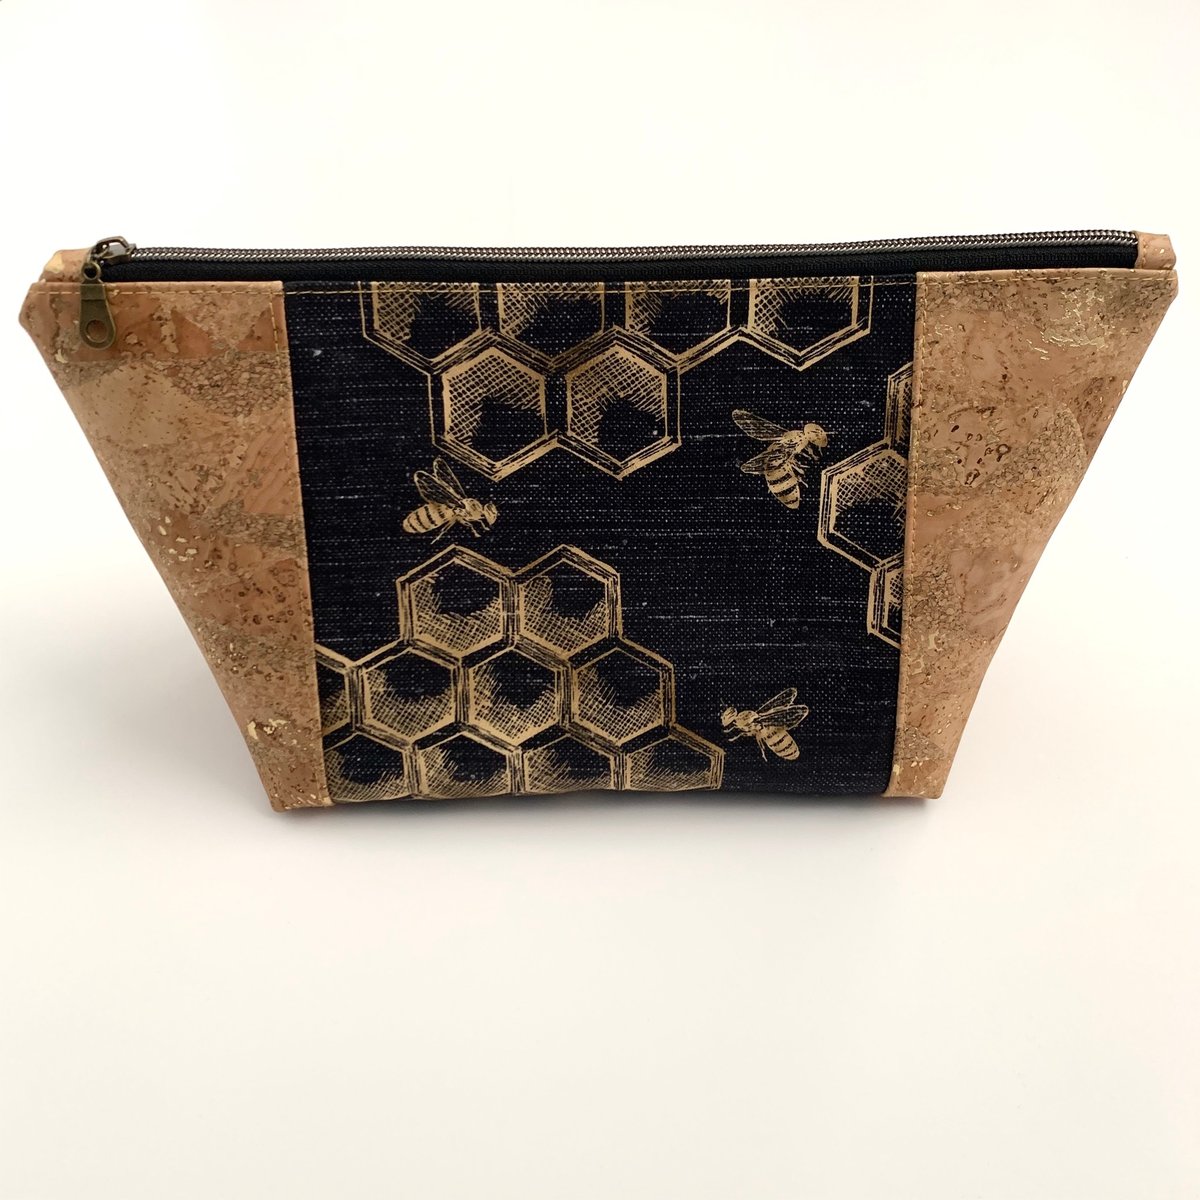 Honeybees beauty bag